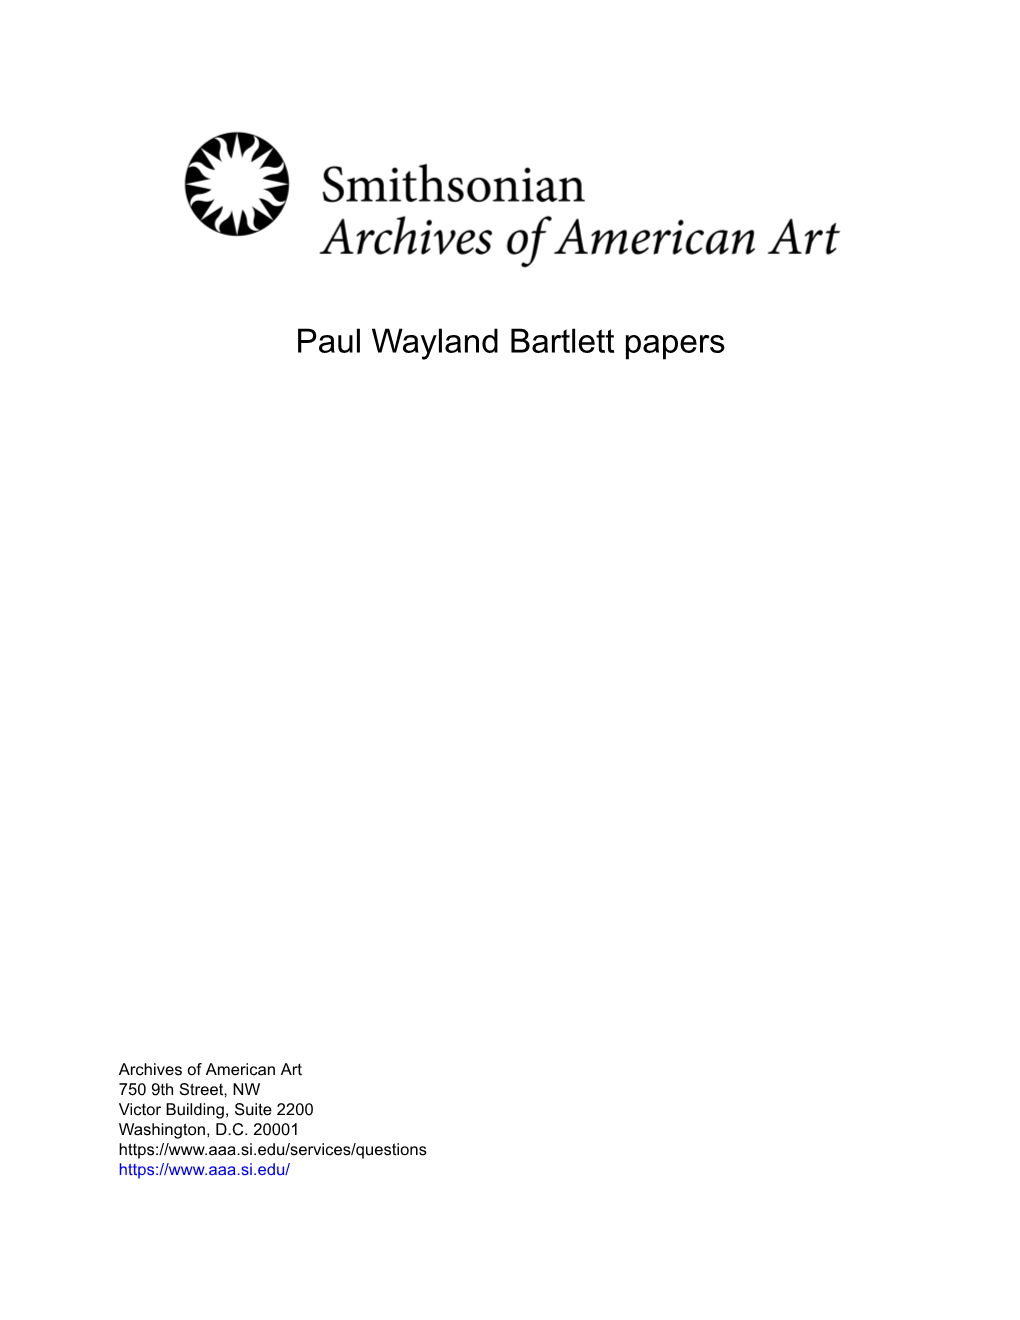 Paul Wayland Bartlett Papers